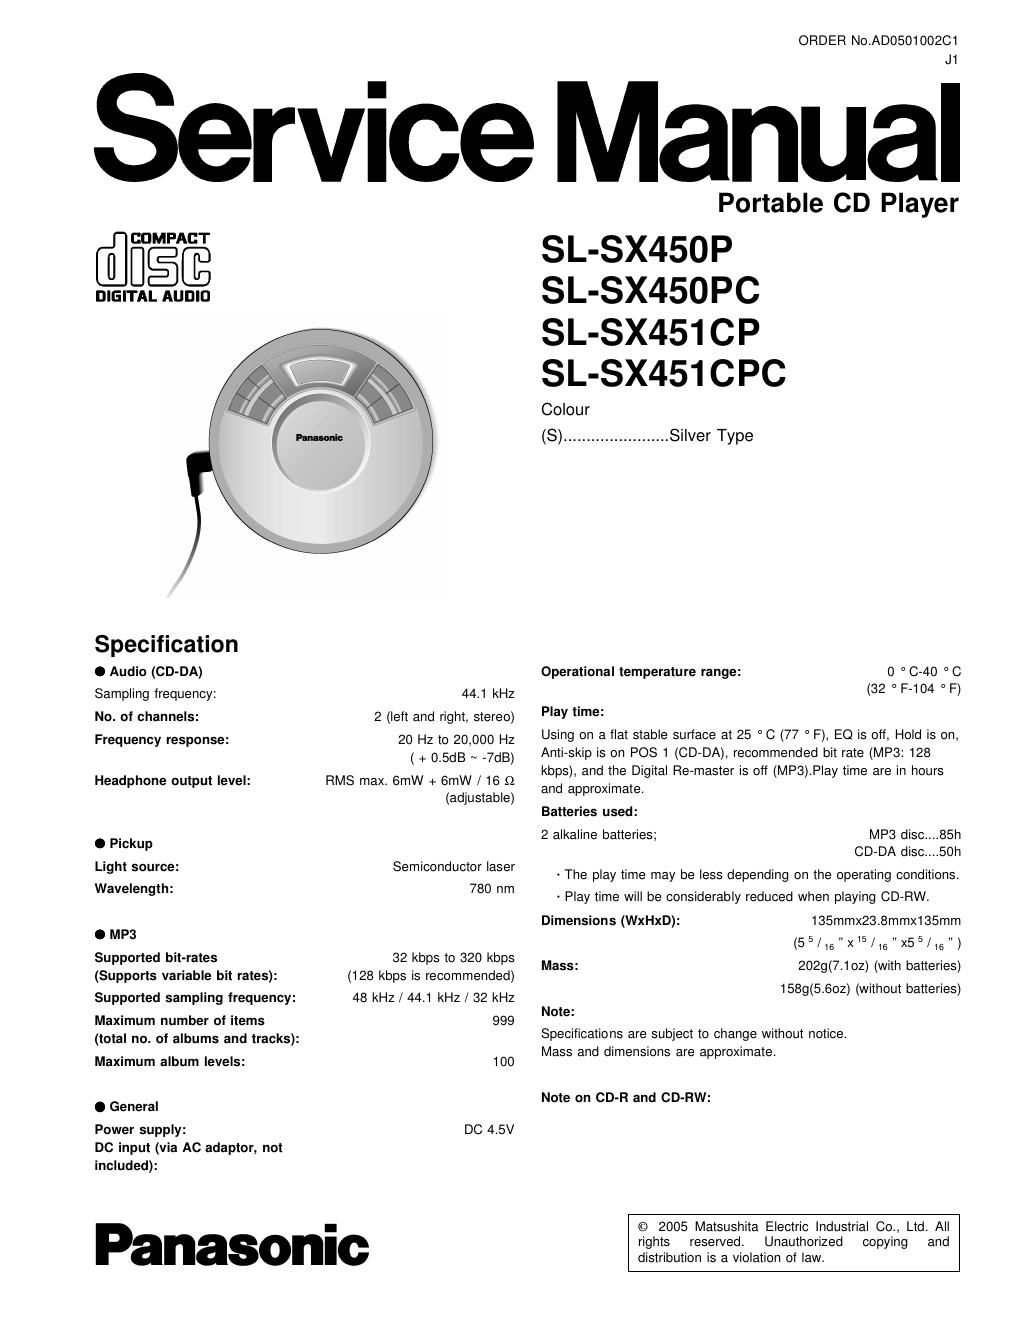 panasonic sl sx 450 cp service manual